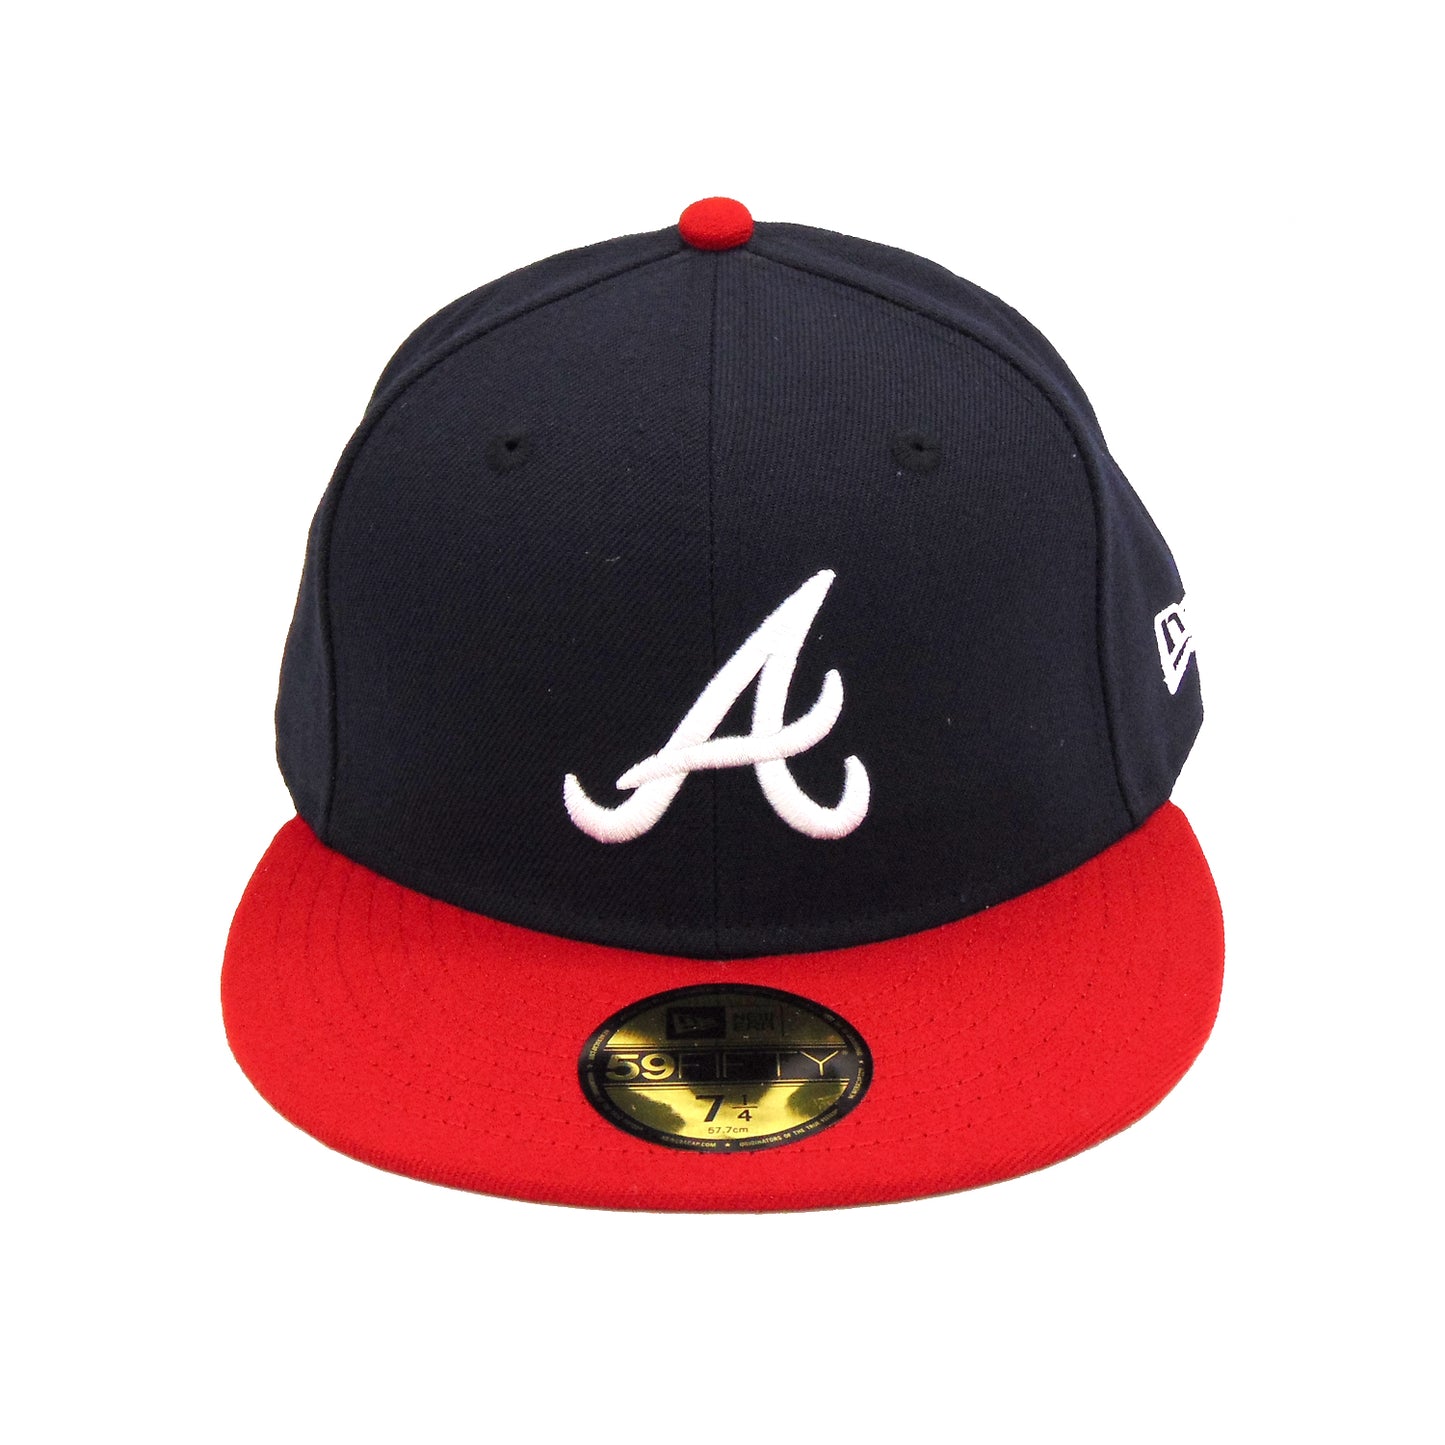 Atlanta Braves Authentic Game Cap Navy Red